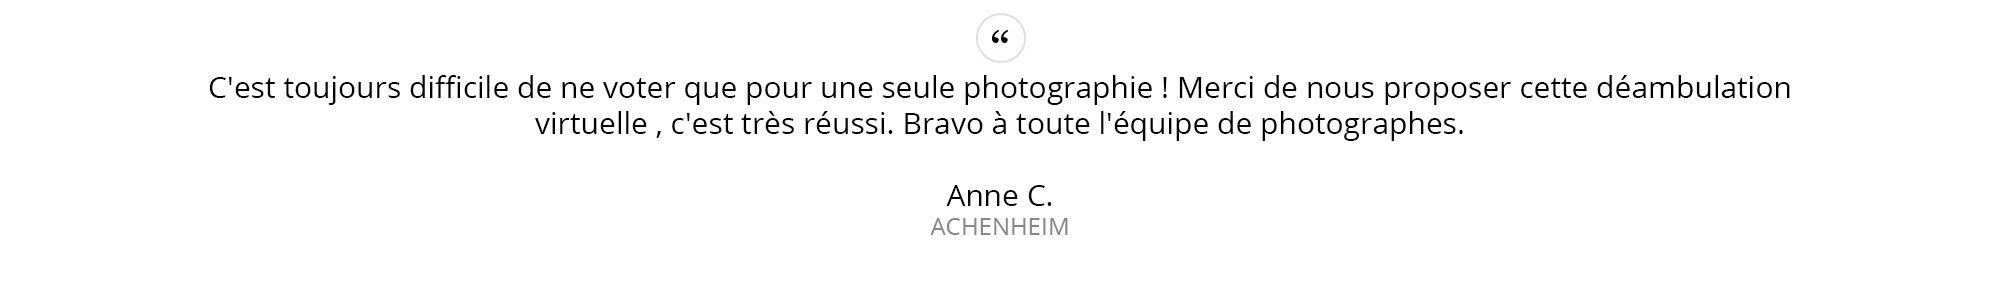 Anne-C.---ACHENHEIM